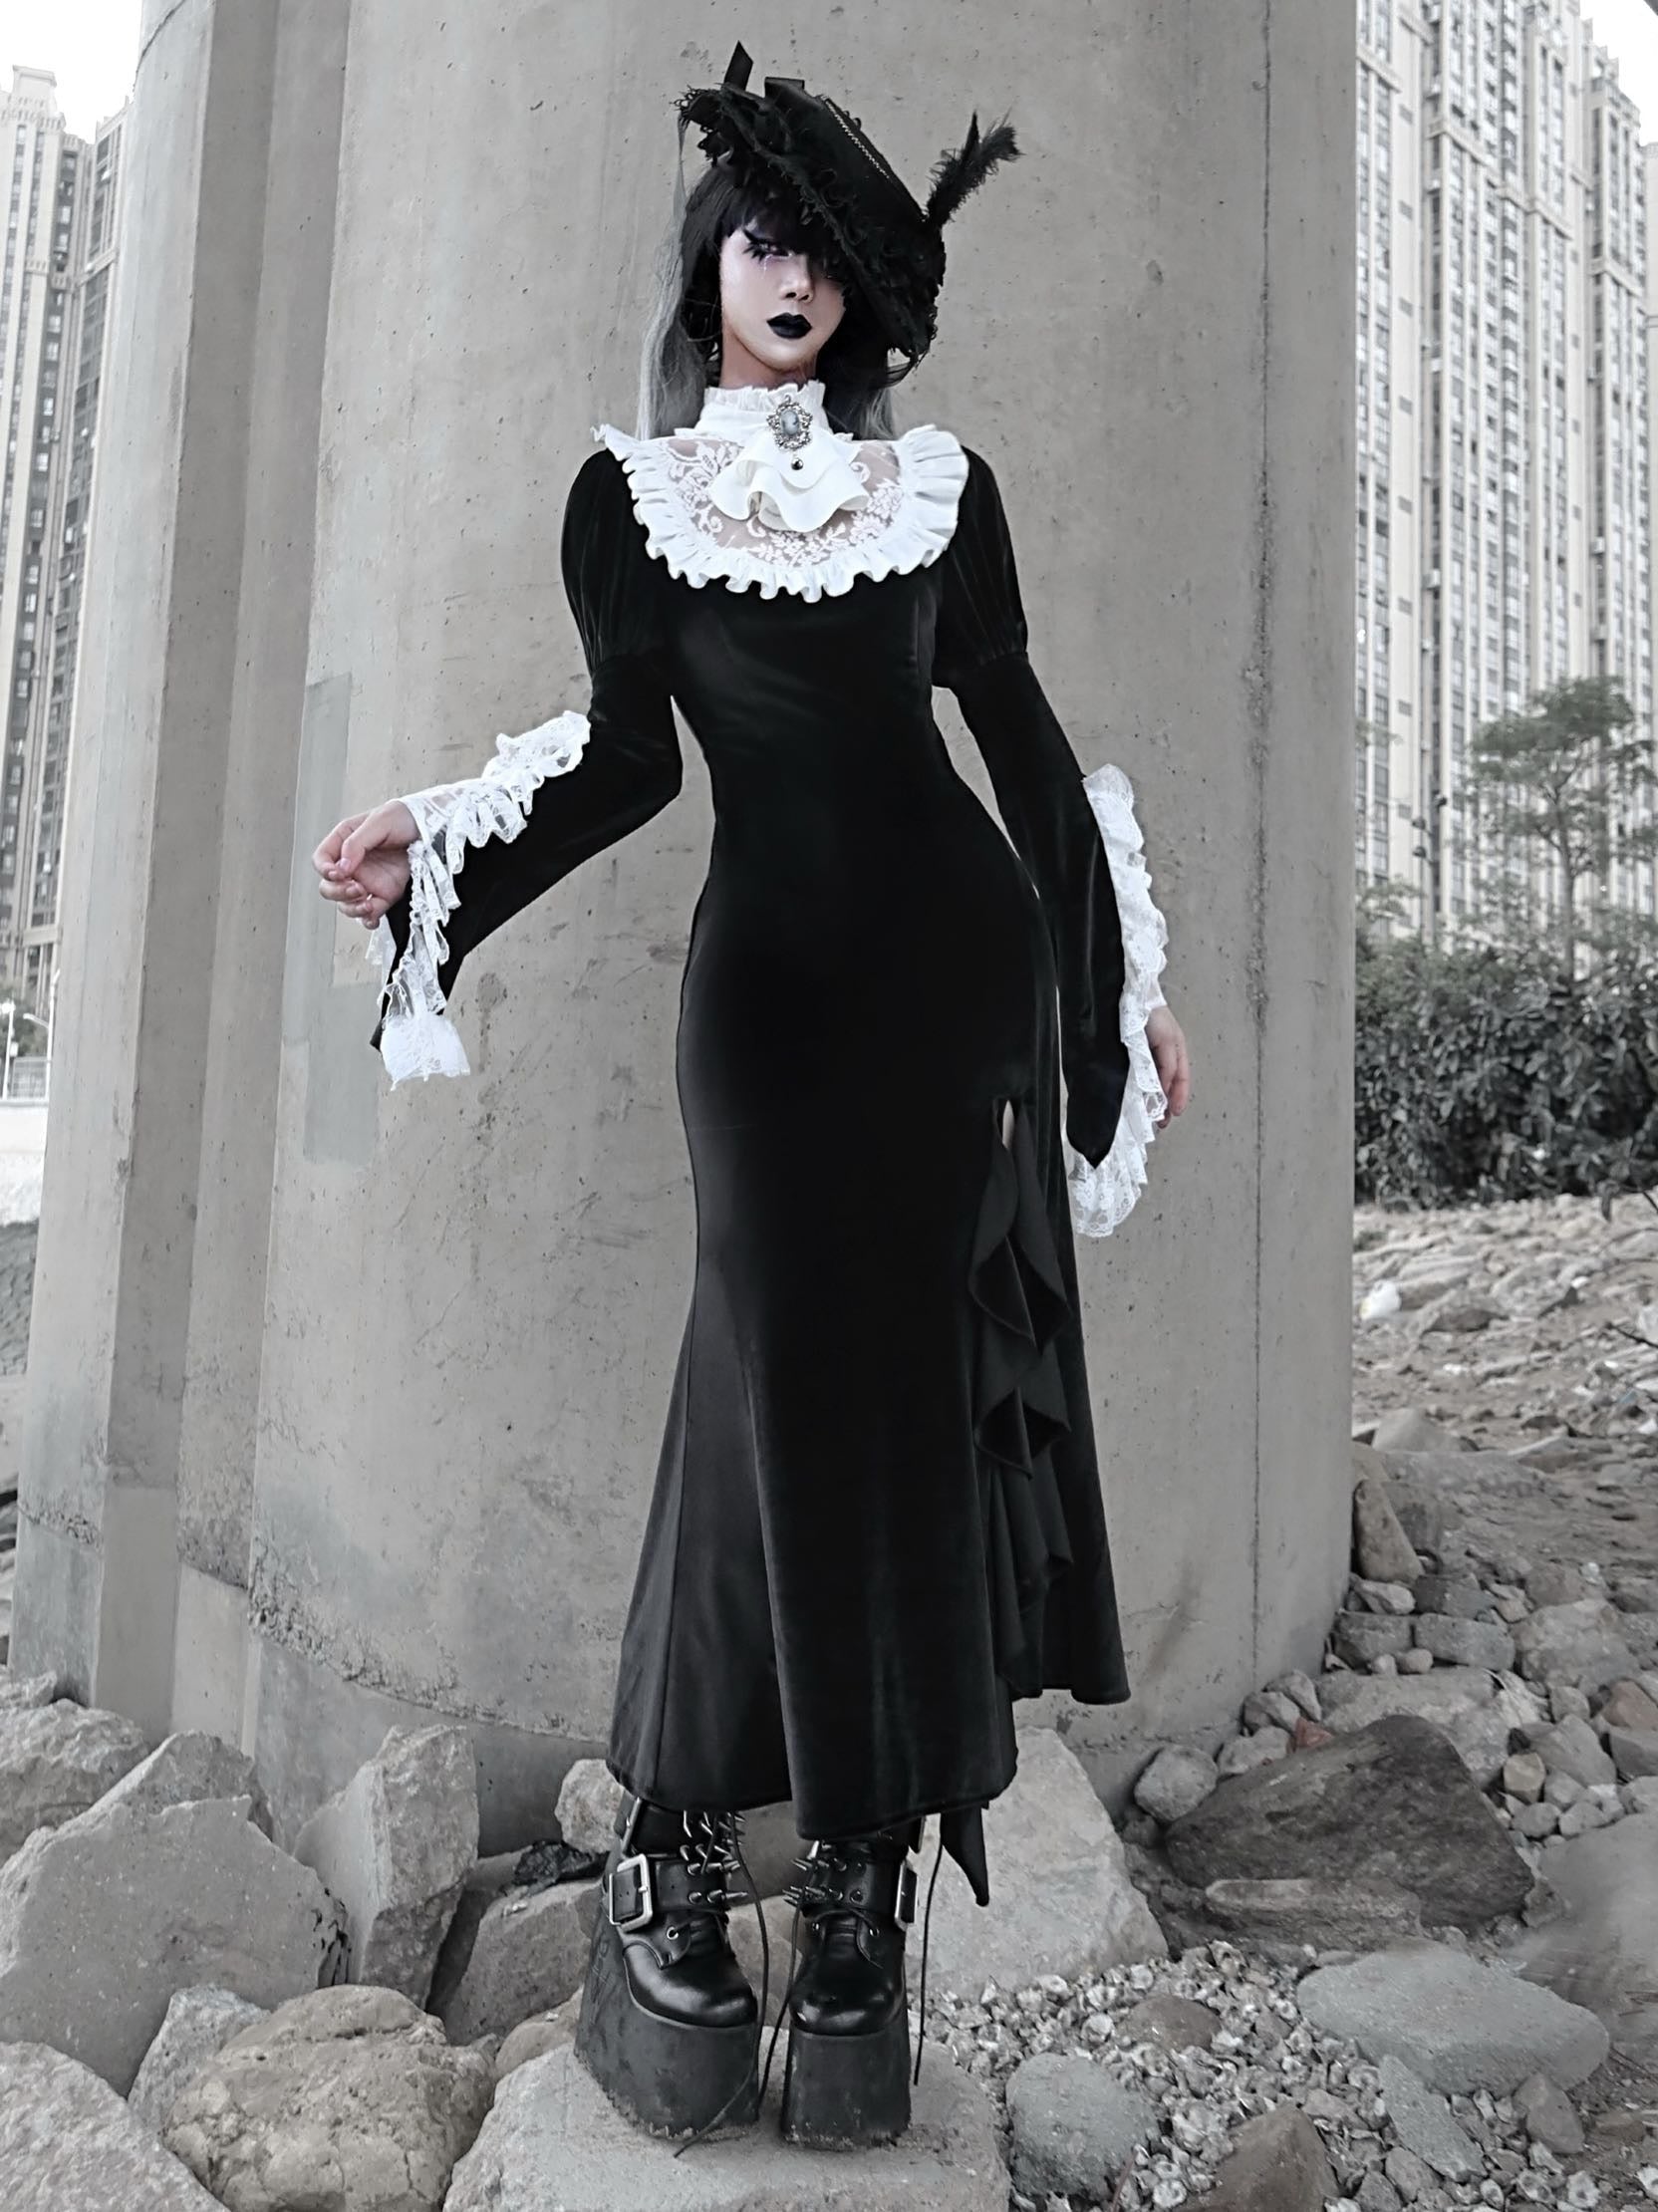 Shop Gothic Lolita Dresses - Unique Styles at 42Lolita